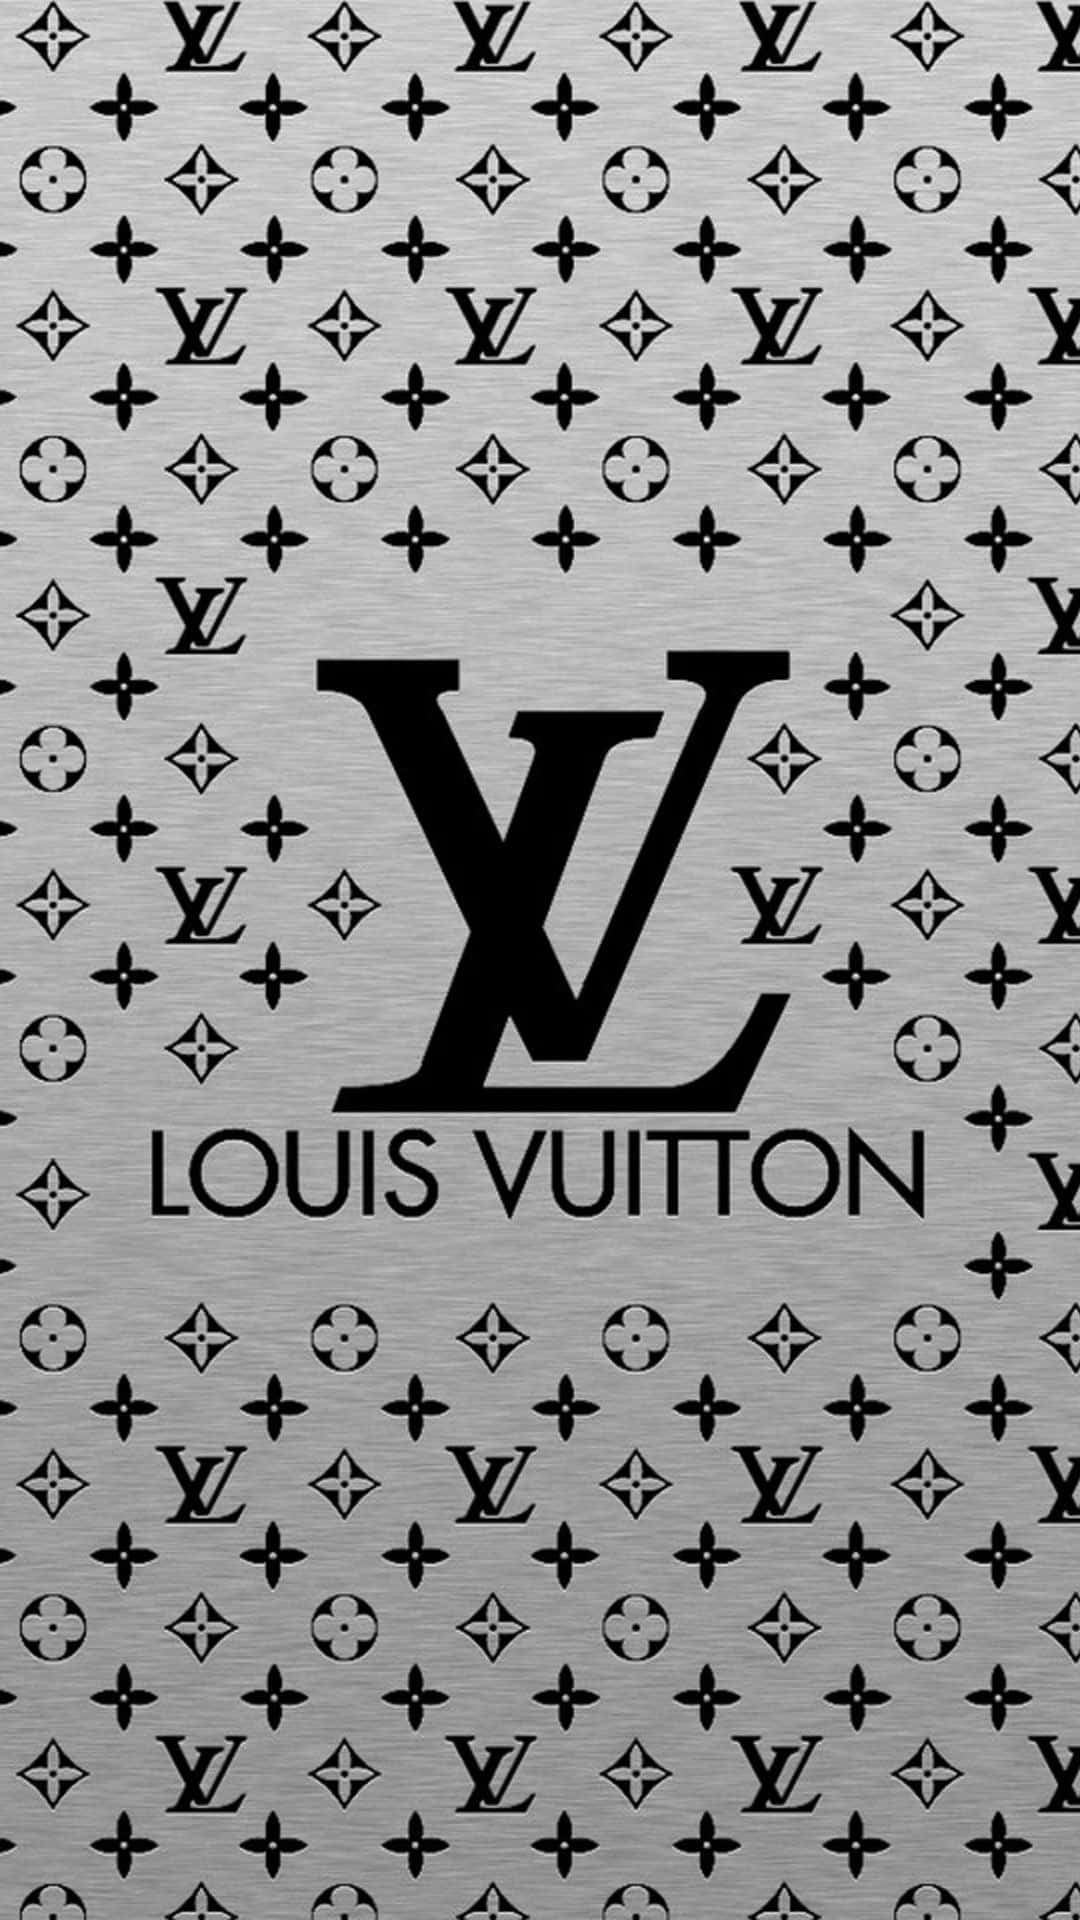 Louis Vuitton Logo On A Black And White Background